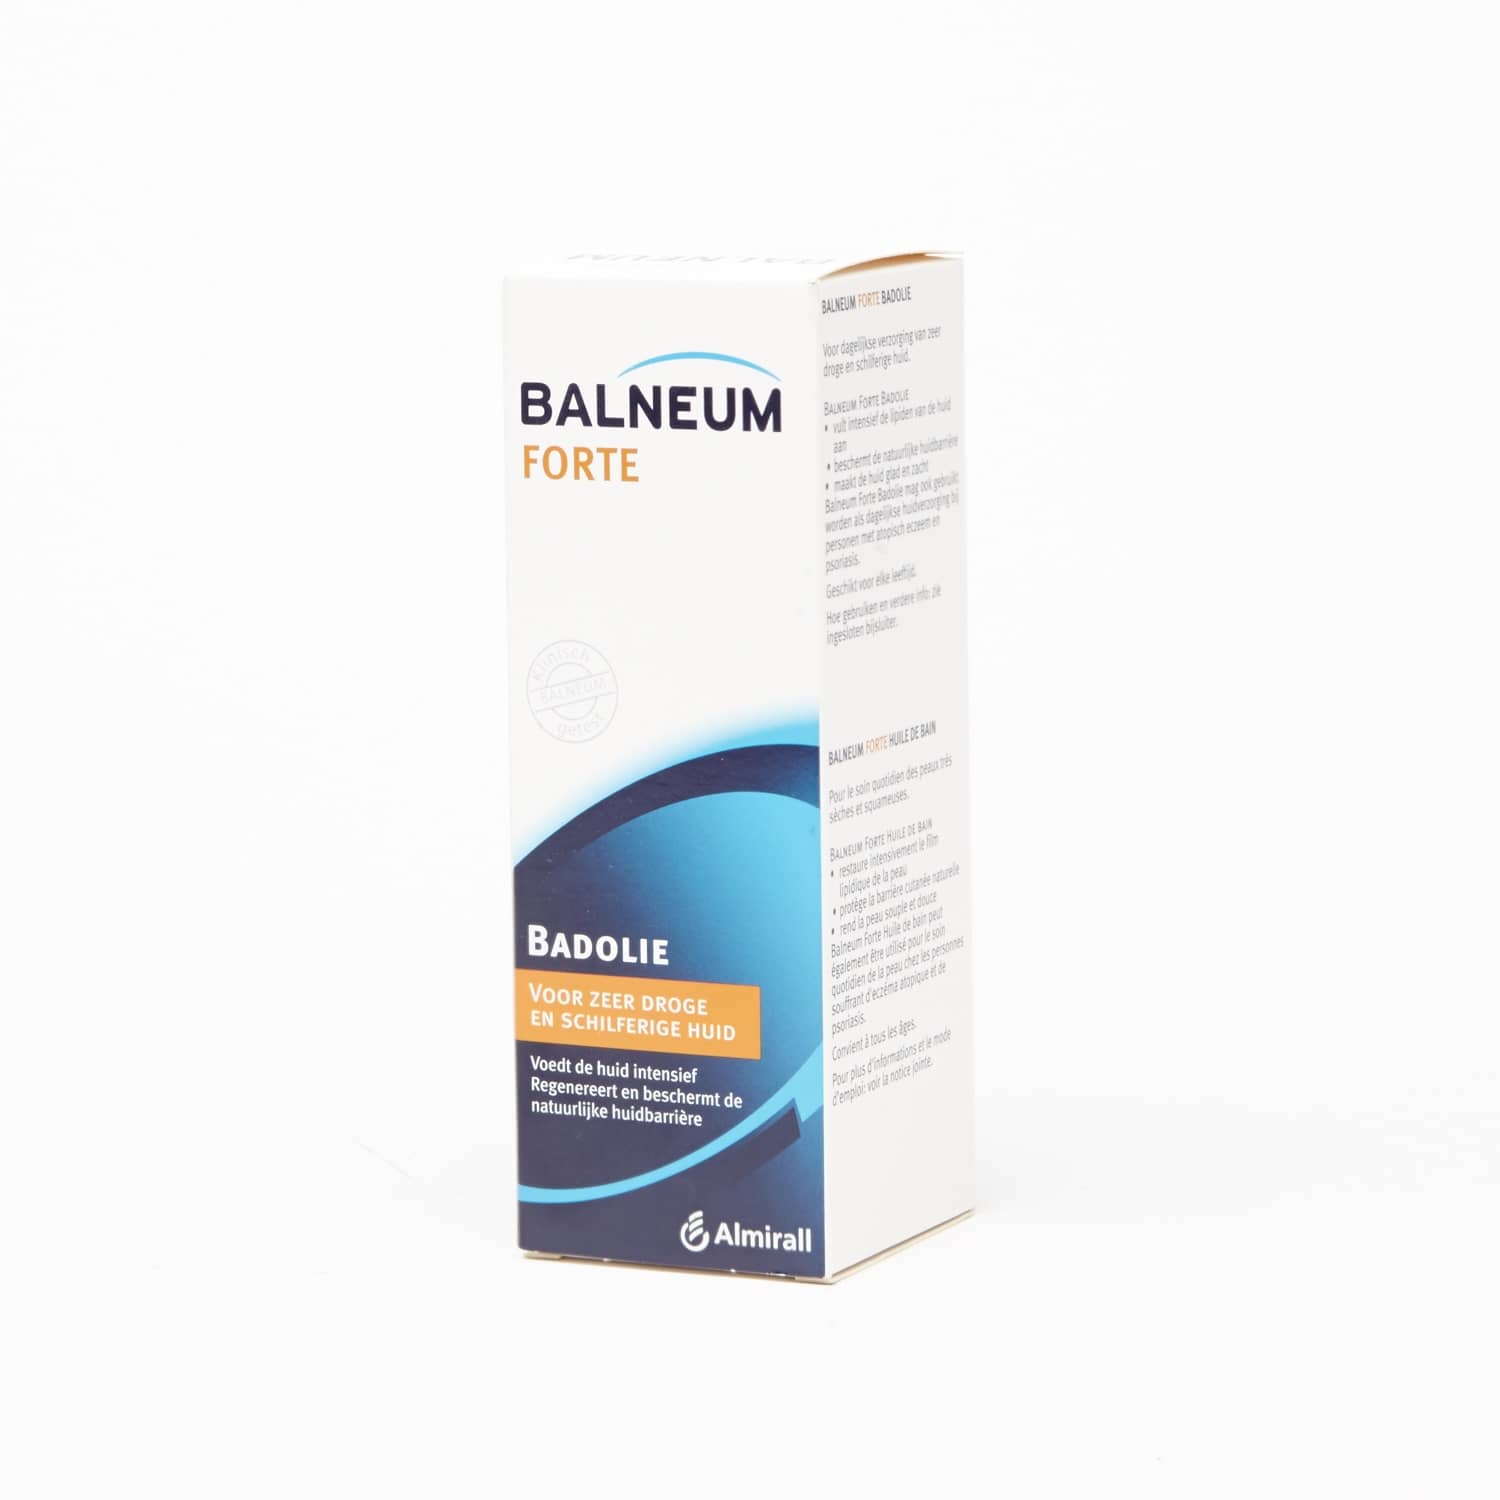 Balneum Hermal Badolie 200 ml - online bestellen Optiphar